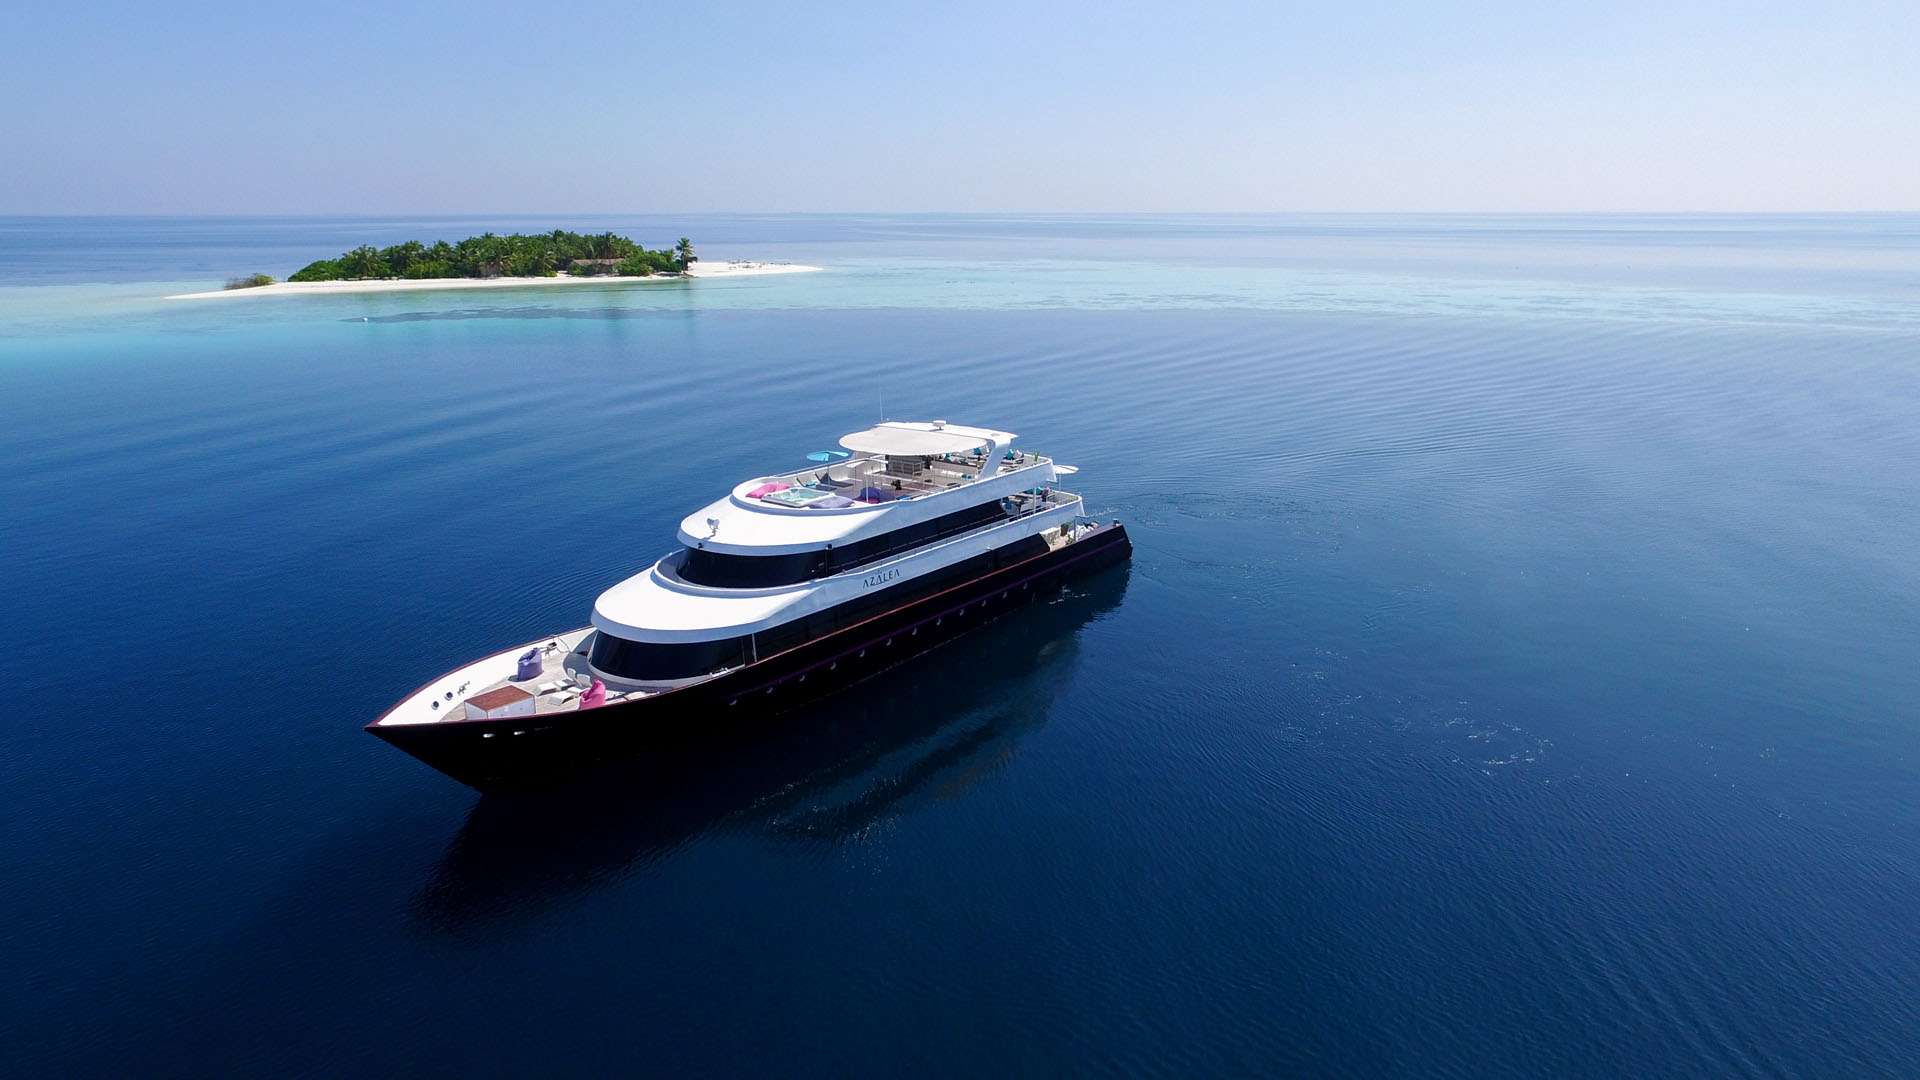 azalea - Superyacht charter Thailand & Boat hire in Indian Ocean & SE Asia 6